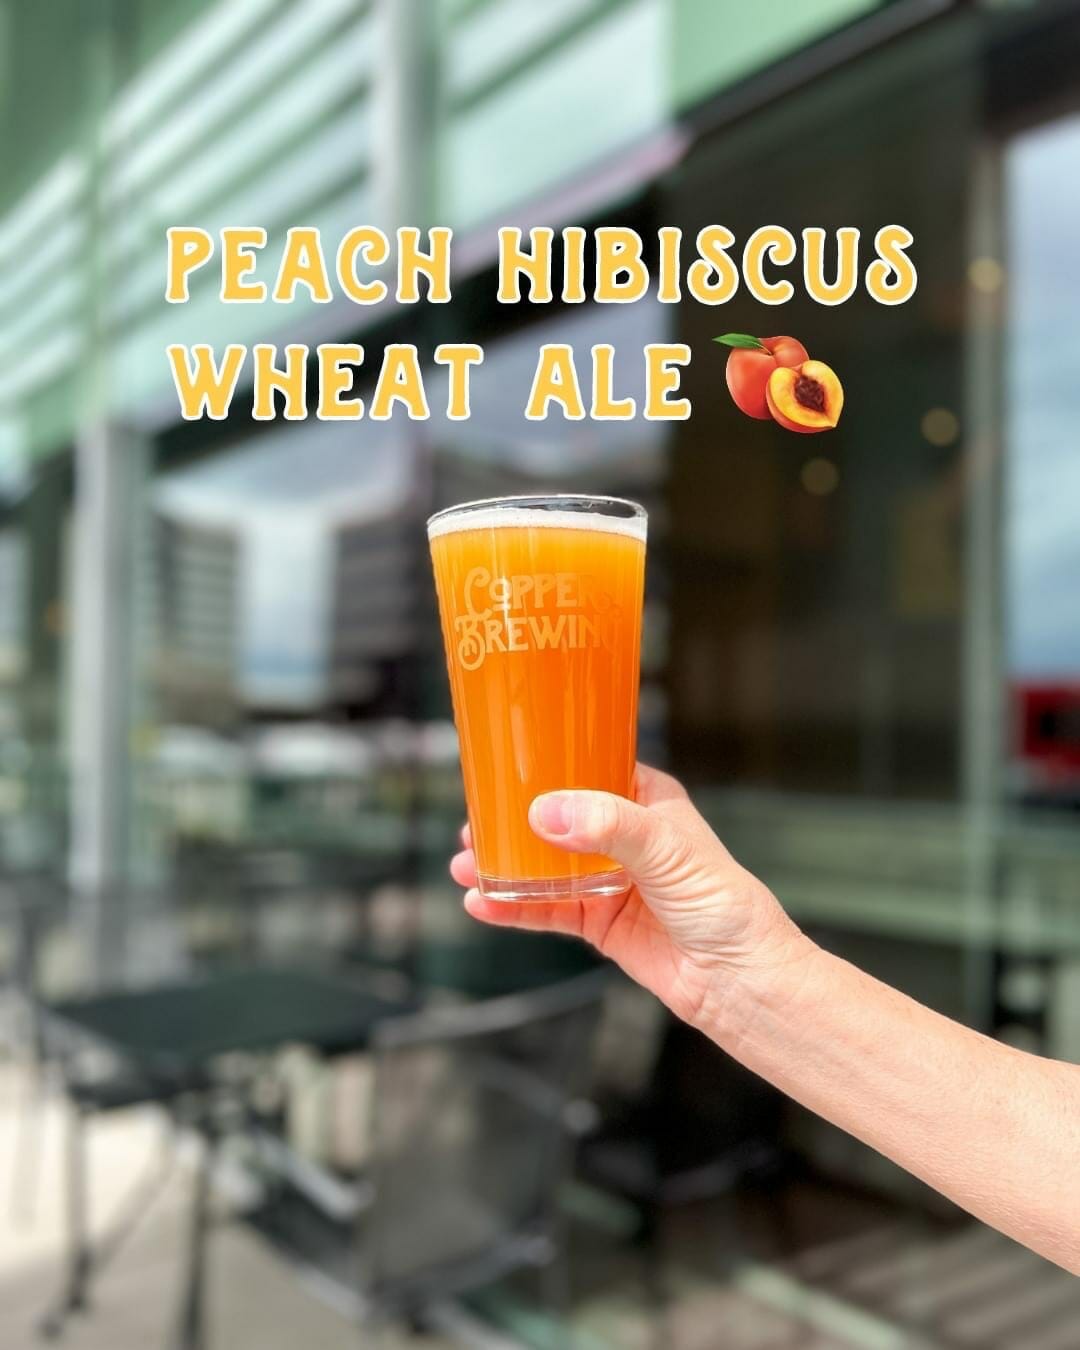 Peach Hibiscus Wheat Ale from Copper Brewing in Kelowna